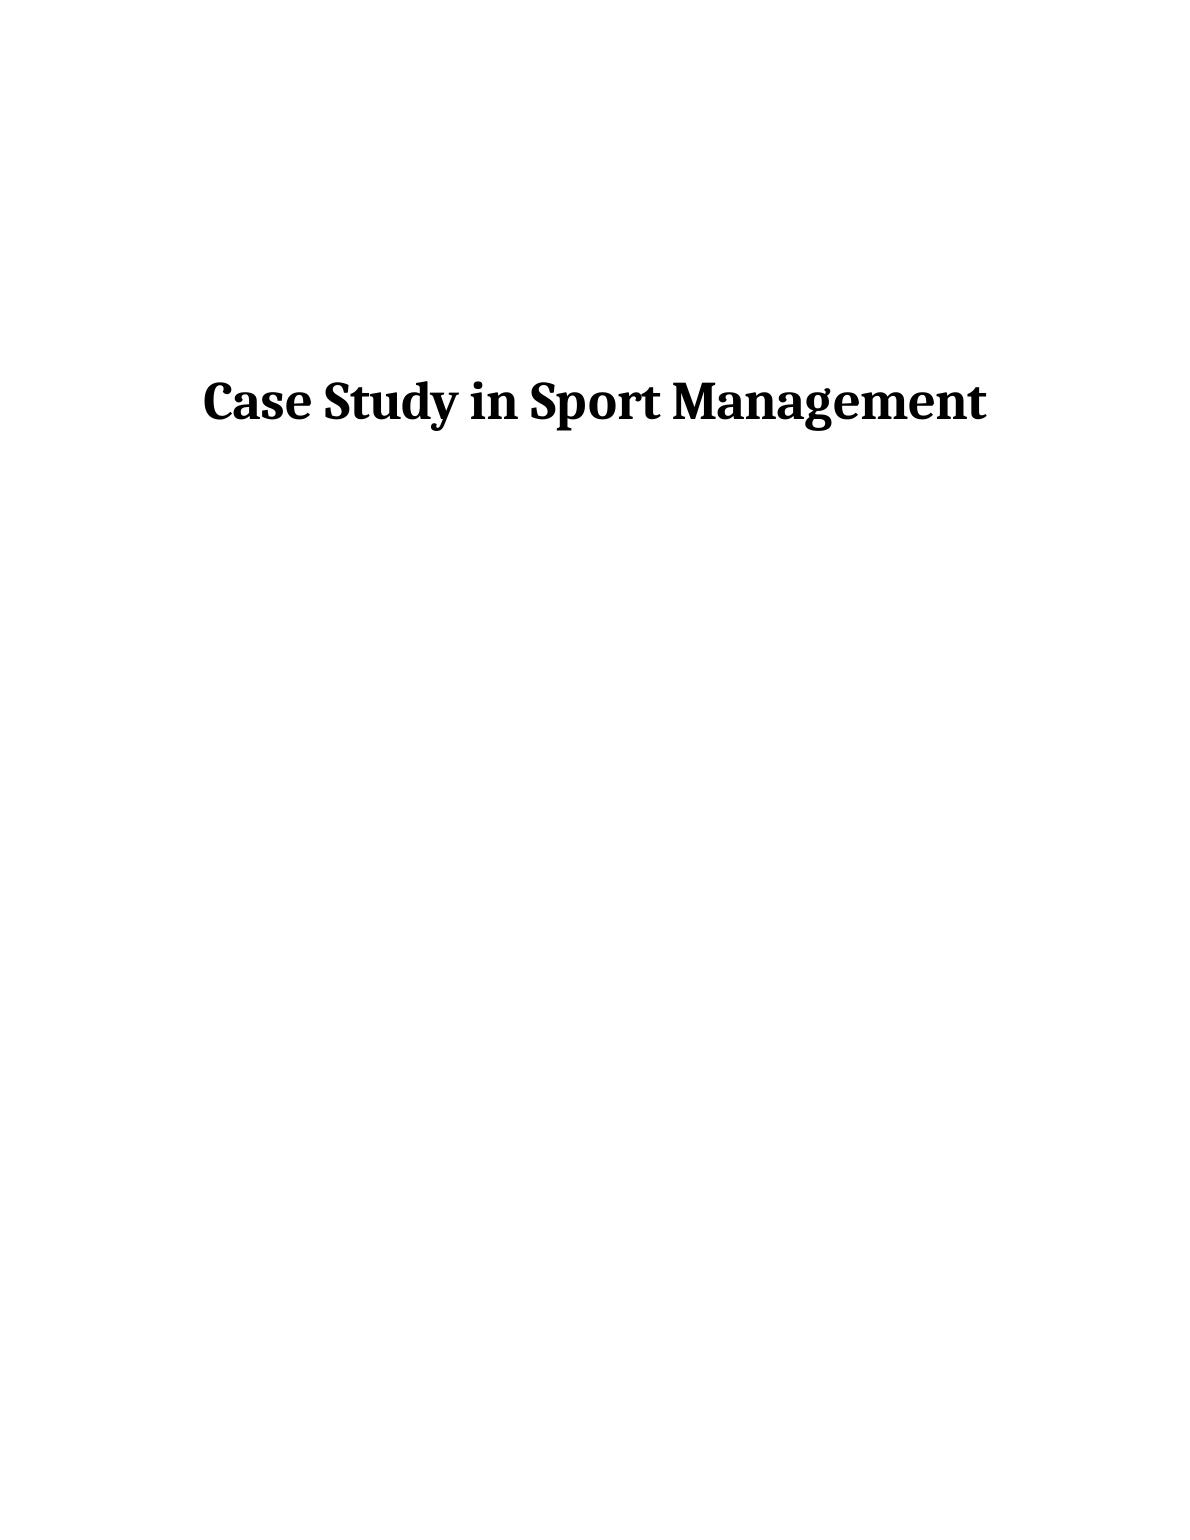 Case Study on Sport Management_1